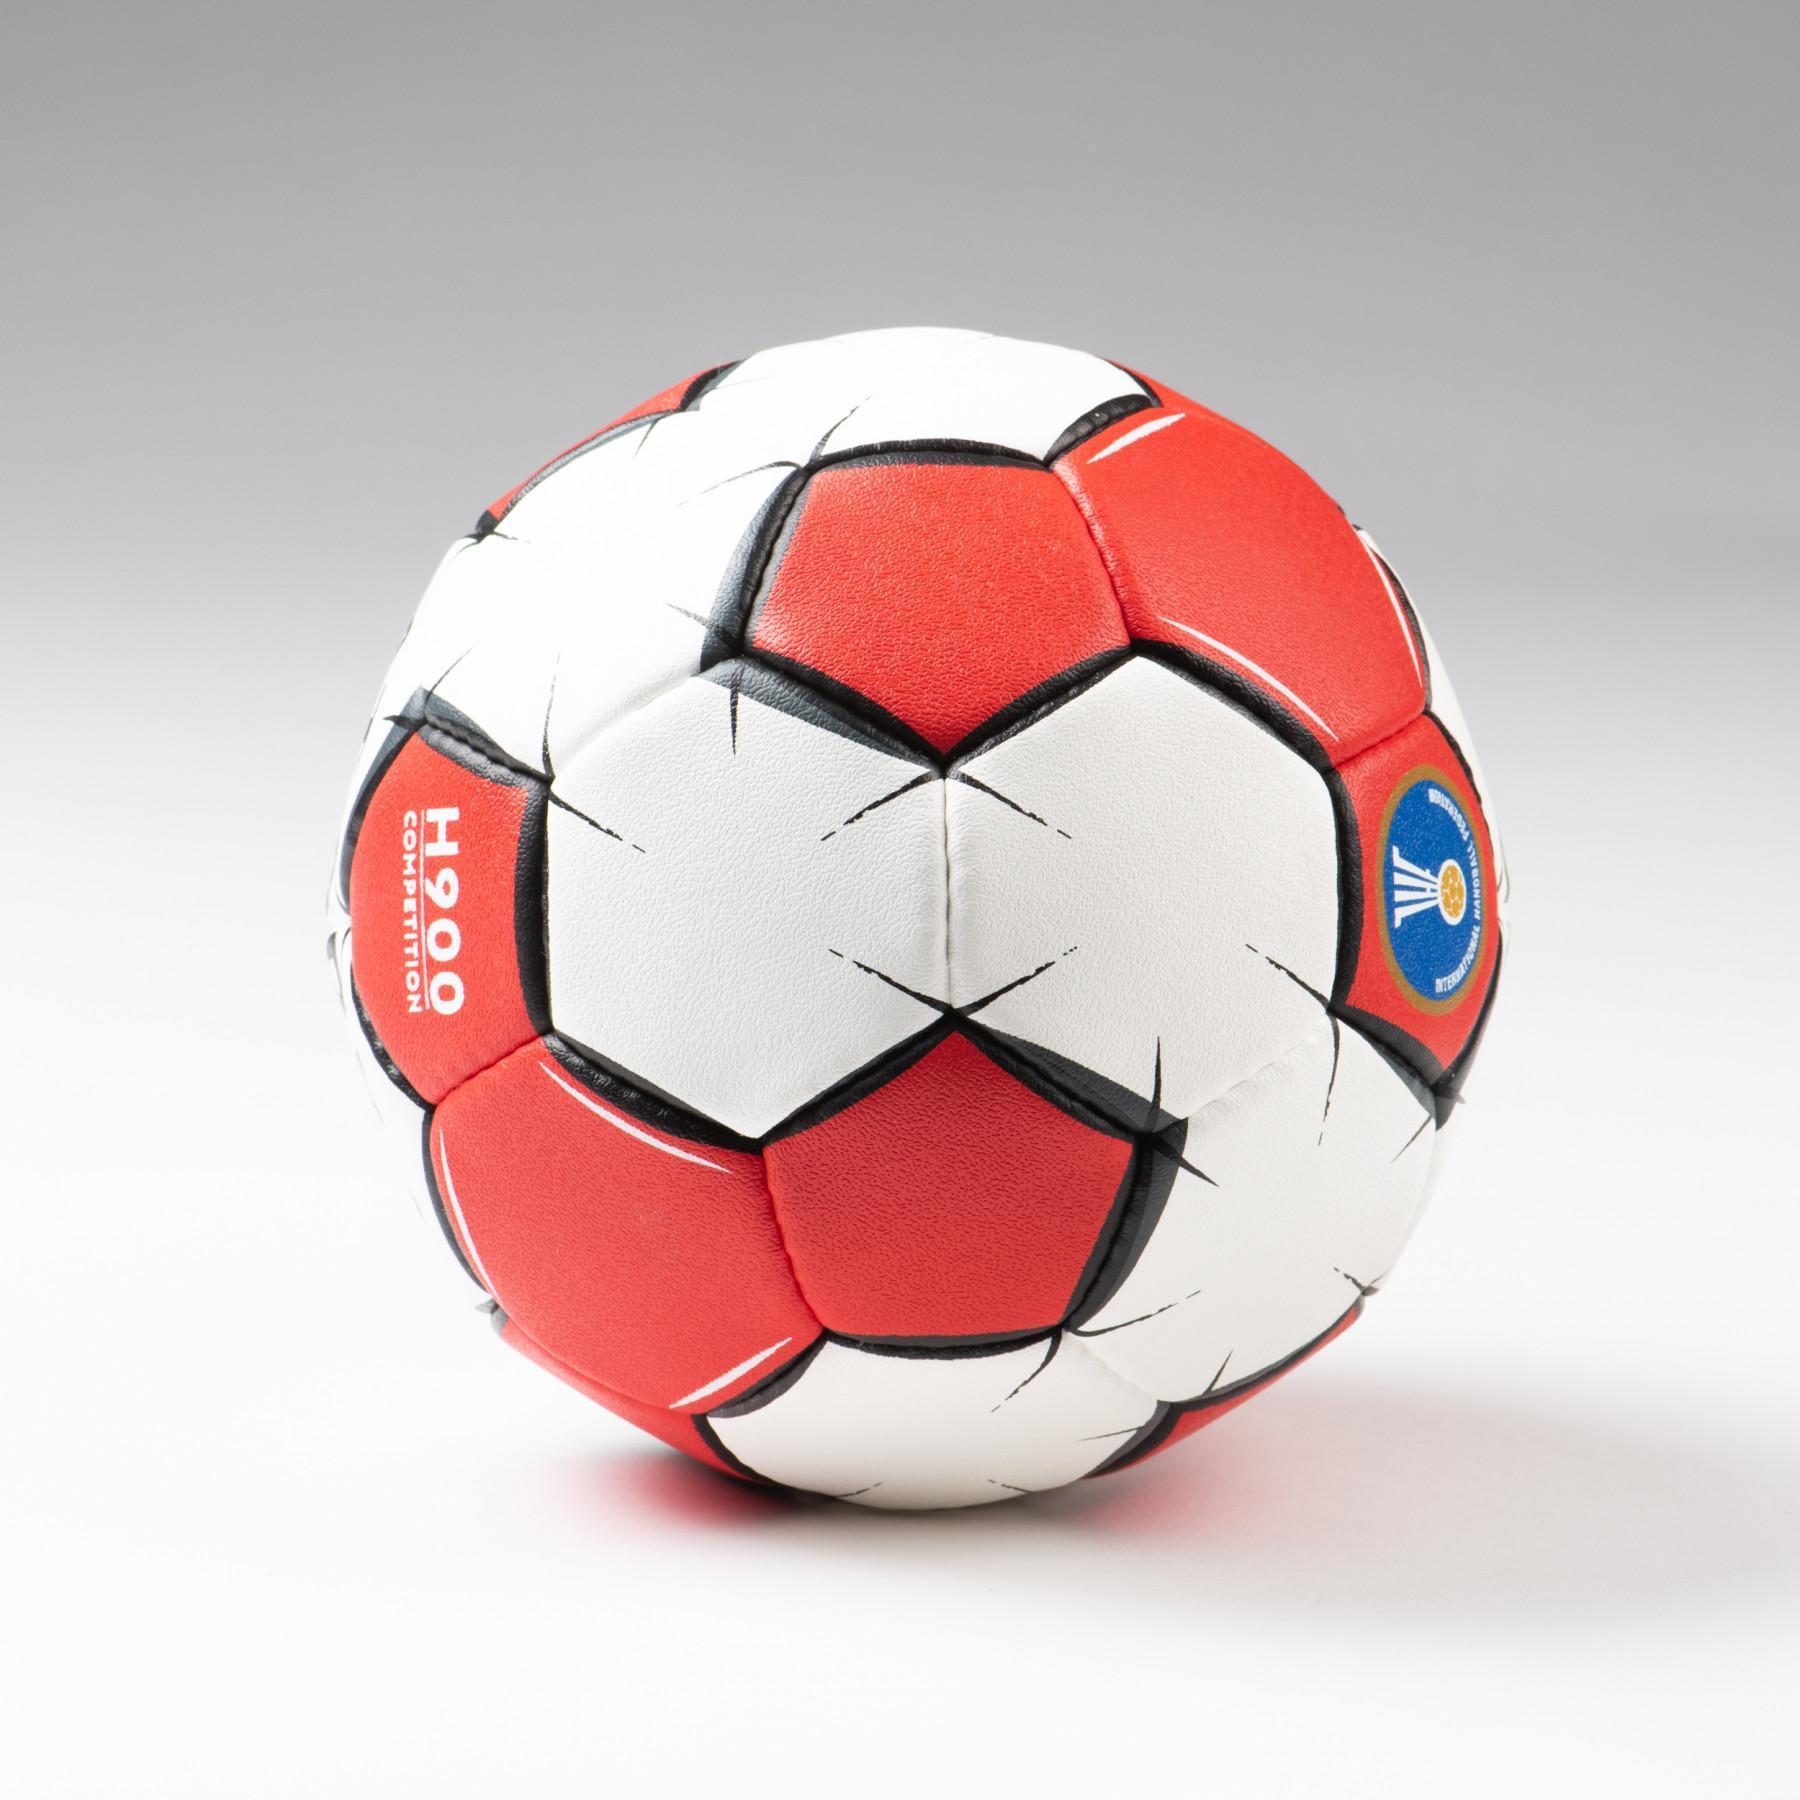 Handball H900 - Size 2